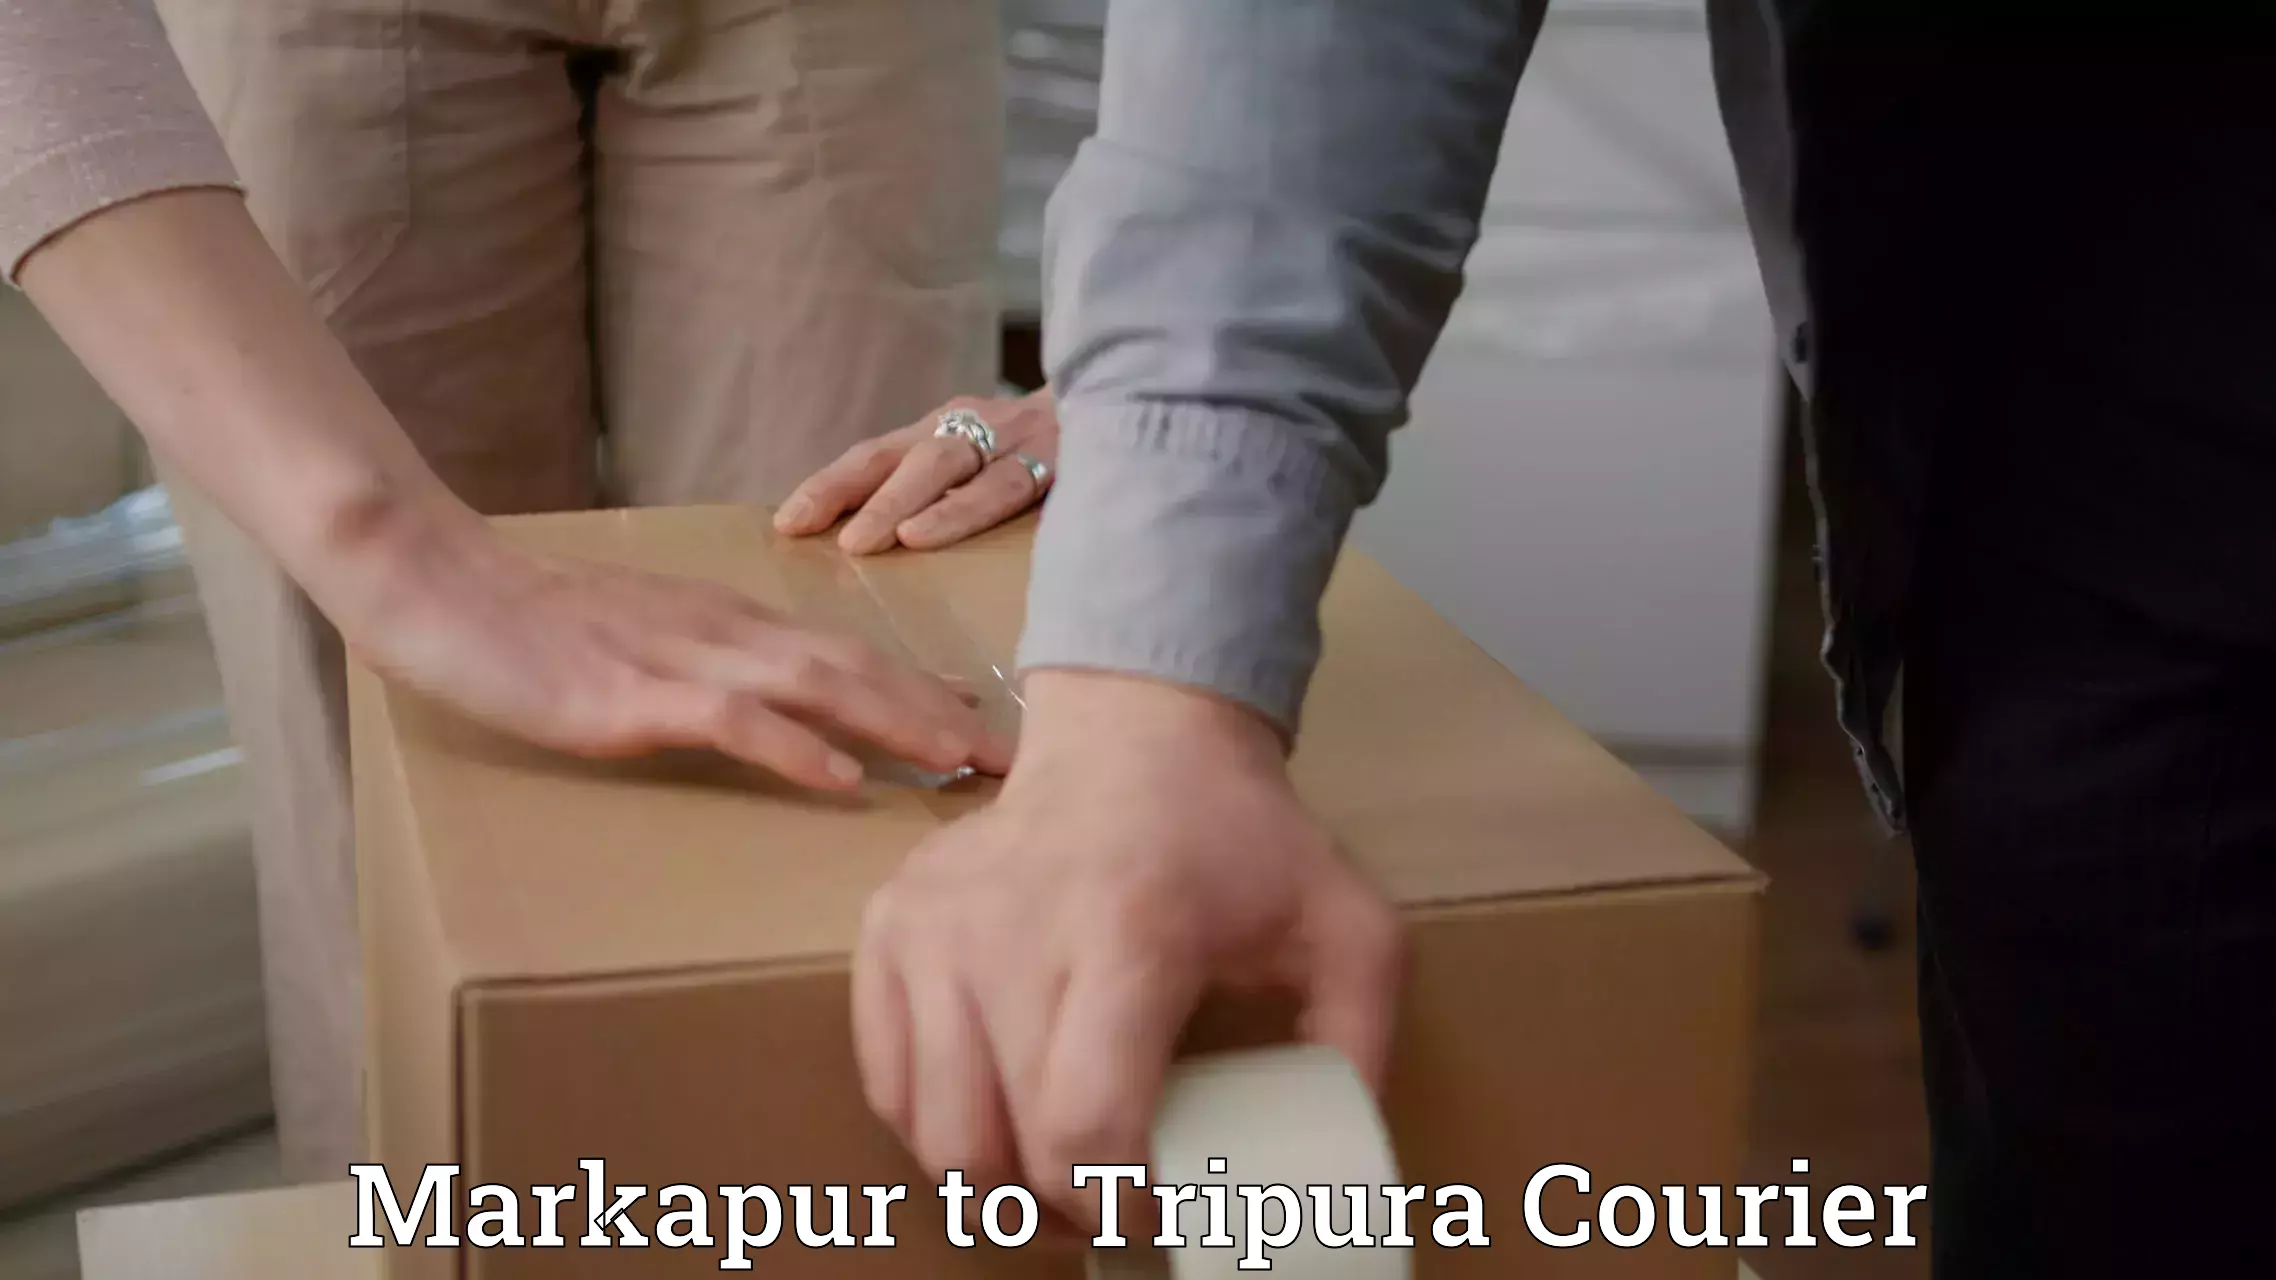 User-friendly delivery service Markapur to Tripura